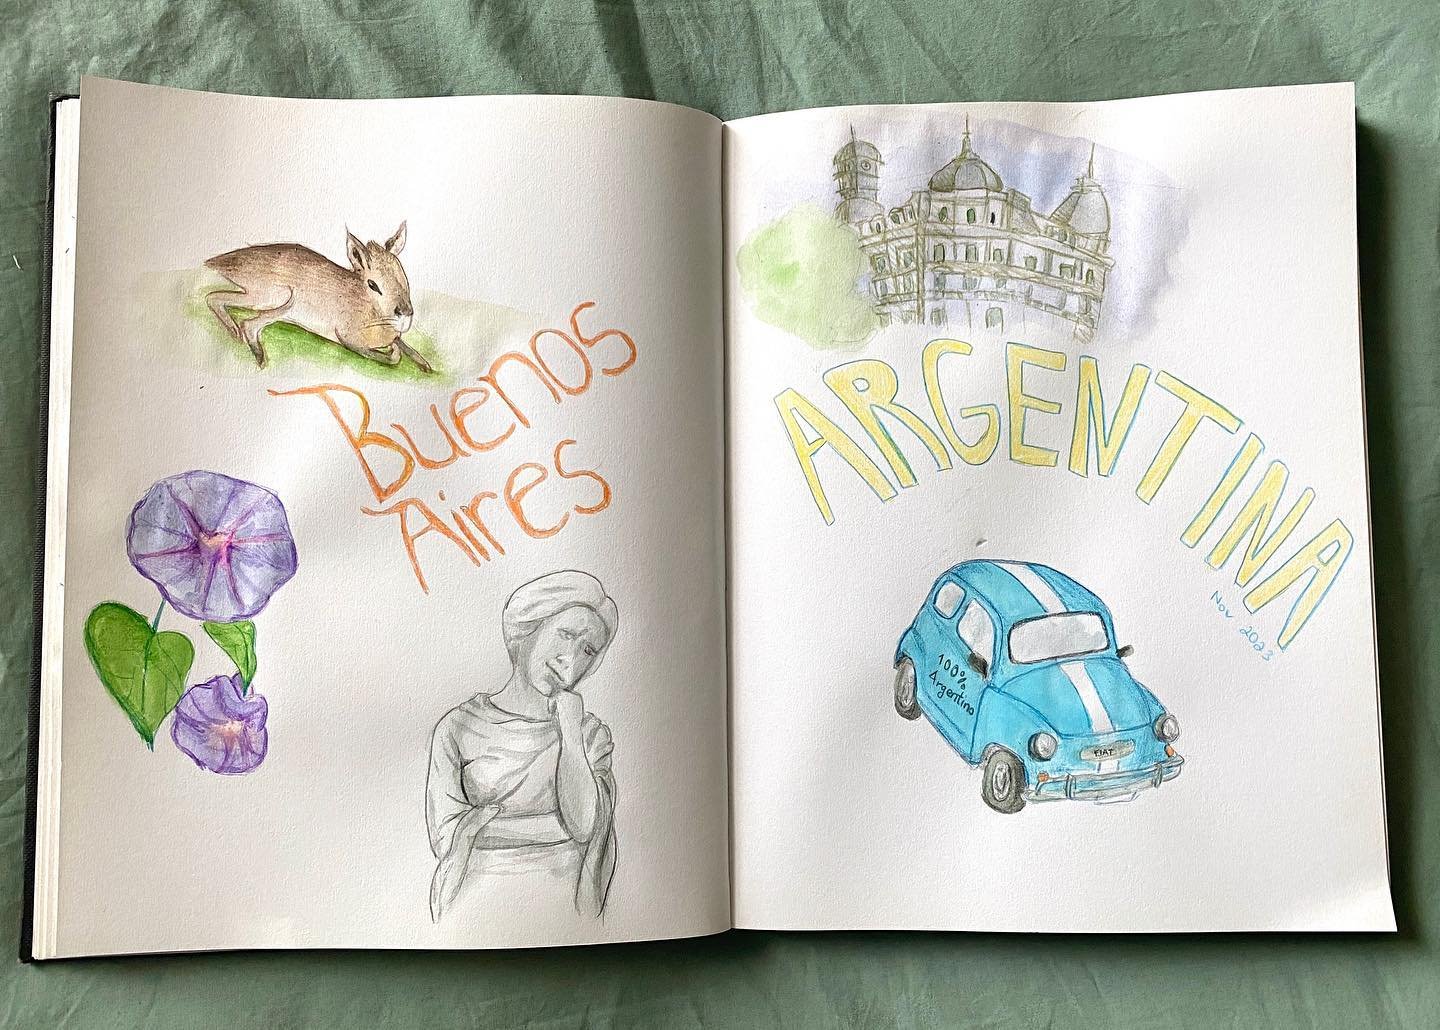 Moments in Argentina 

#argentina🇦🇷 #travelsketchbook